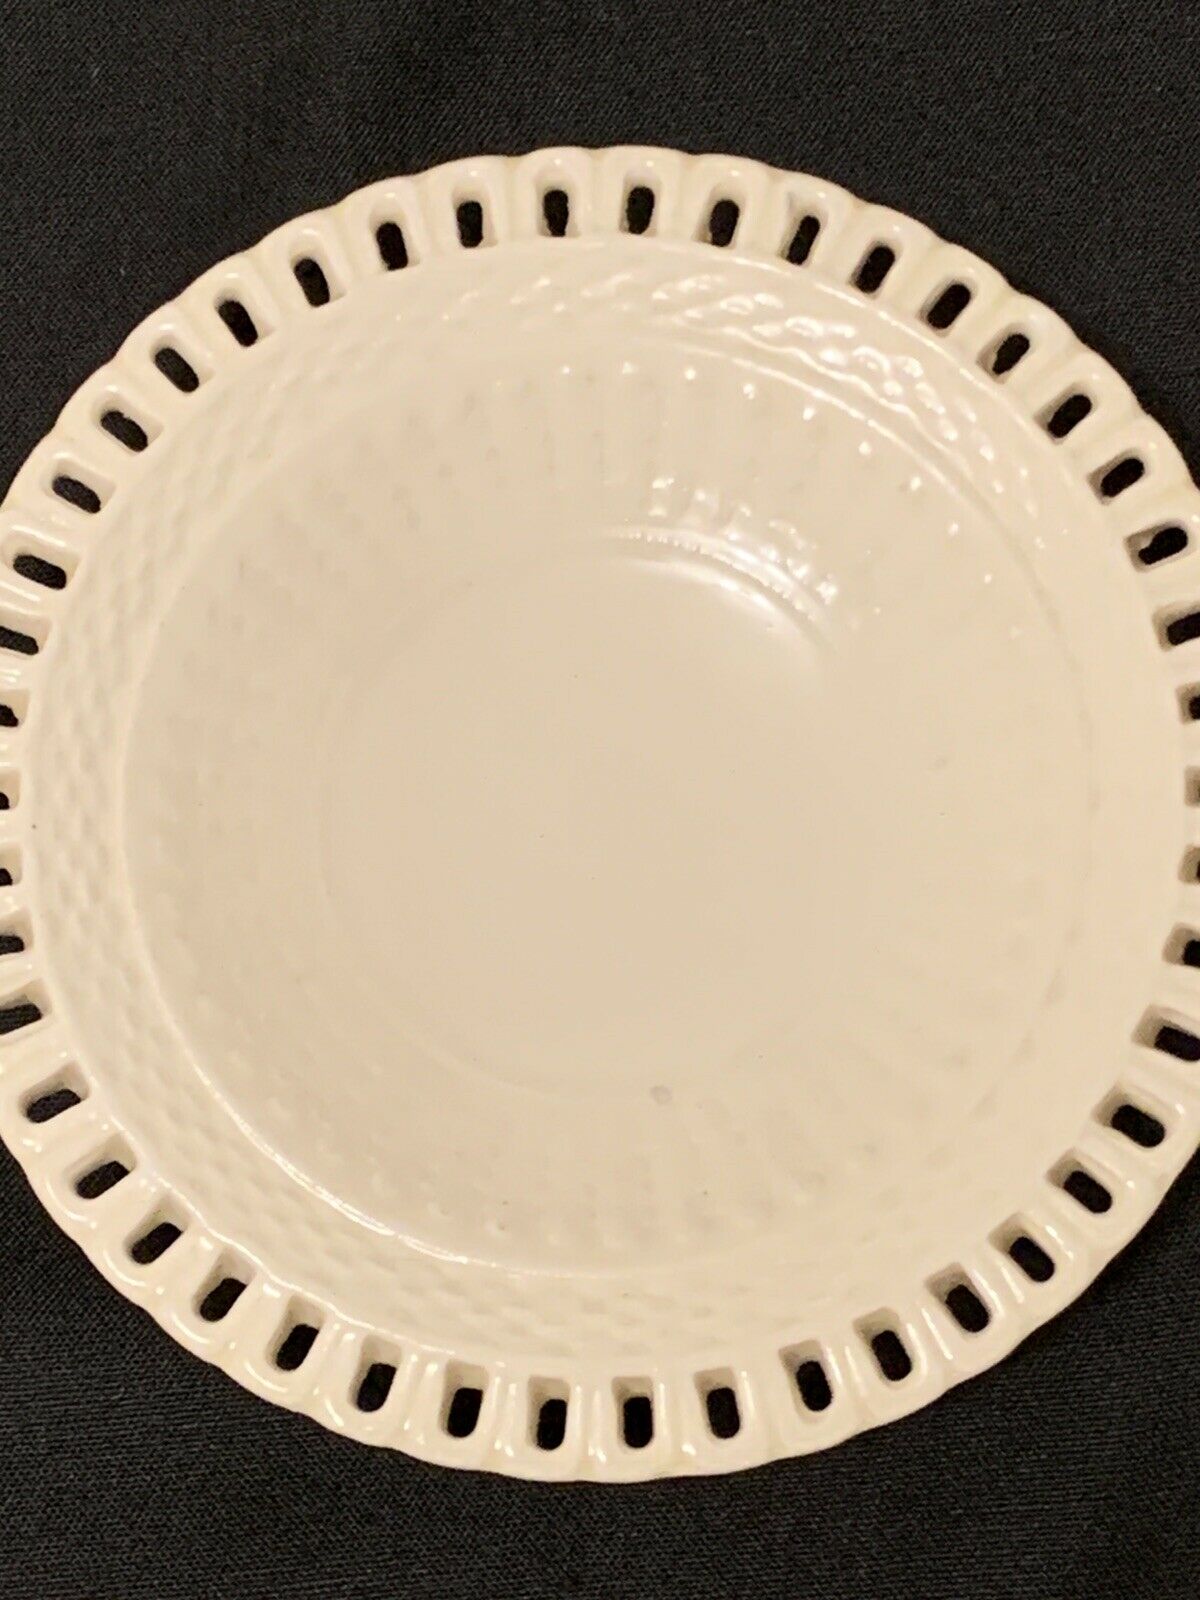 Antique English Antique Creamware Reticulated Small Plate Saucer 3 1/2” Rare